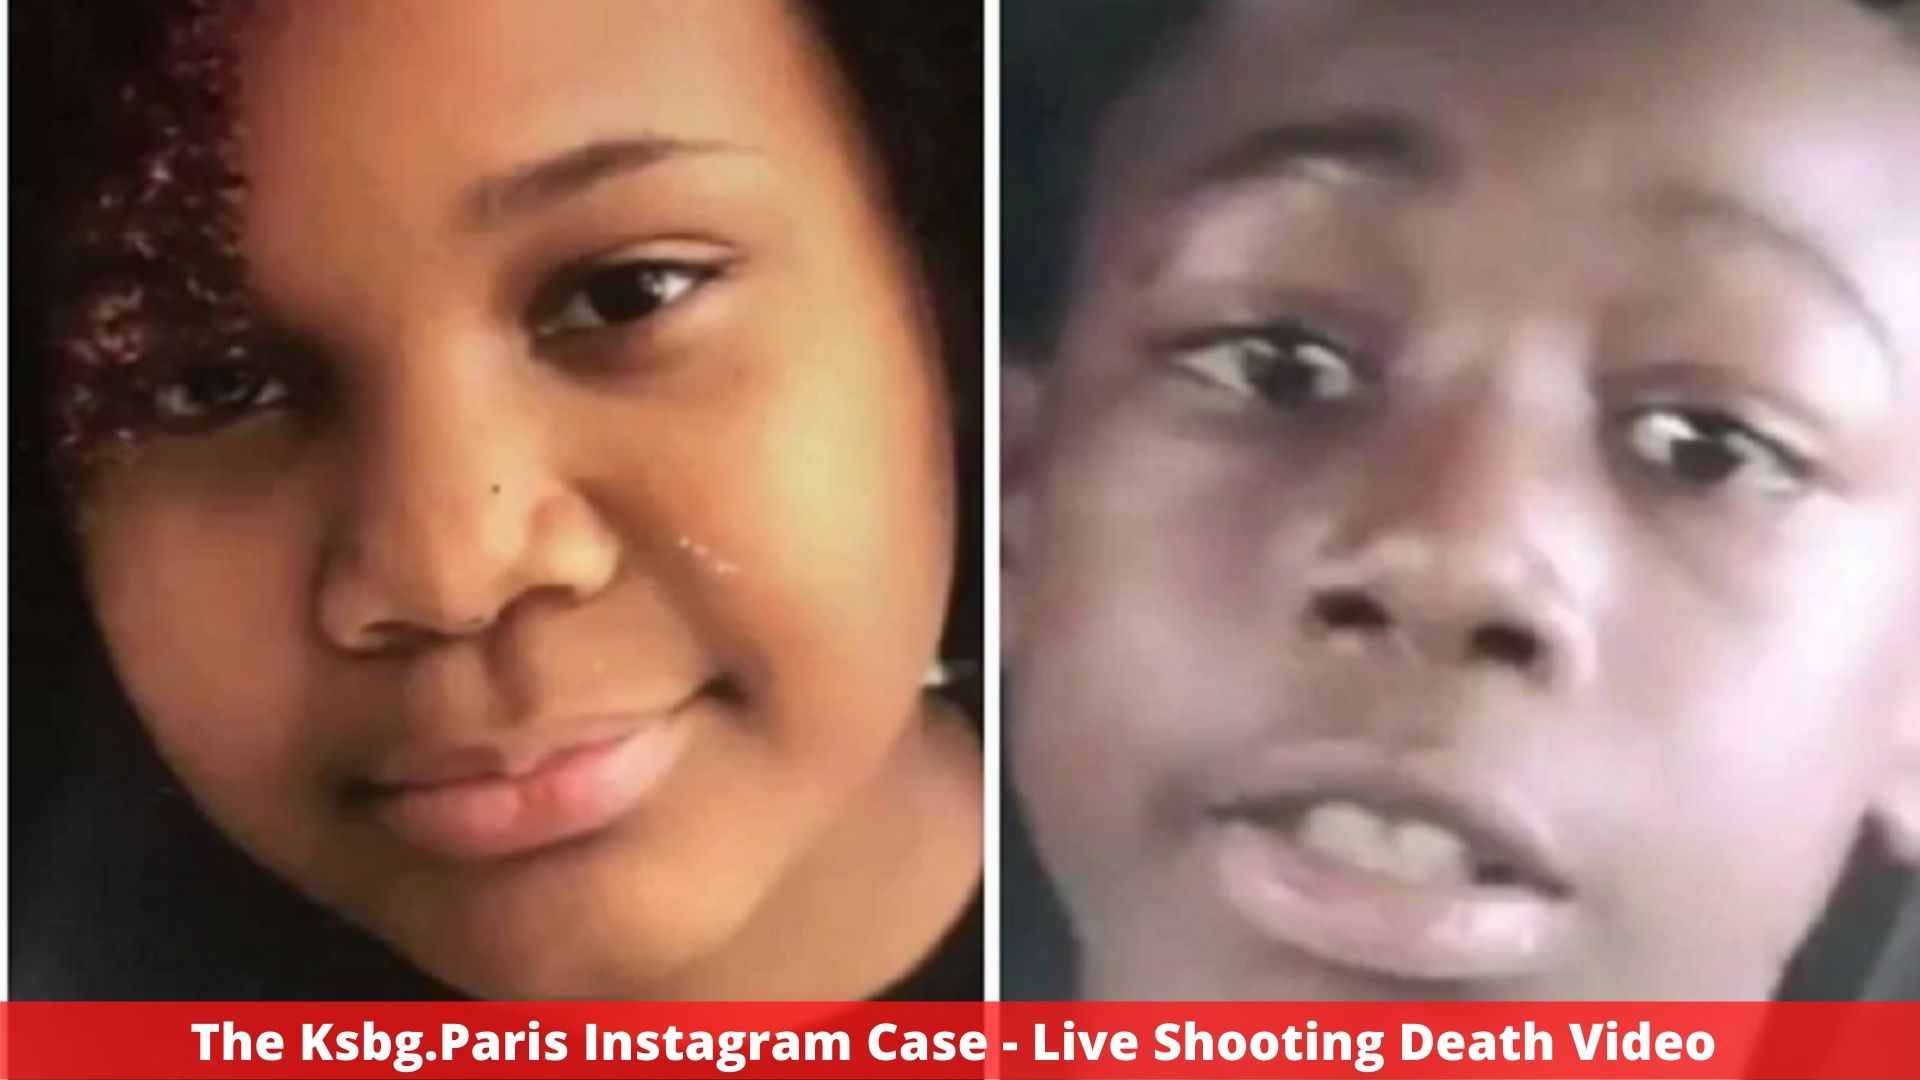 The Ksbg.Paris Instagram Case - Live Shooting Death Video